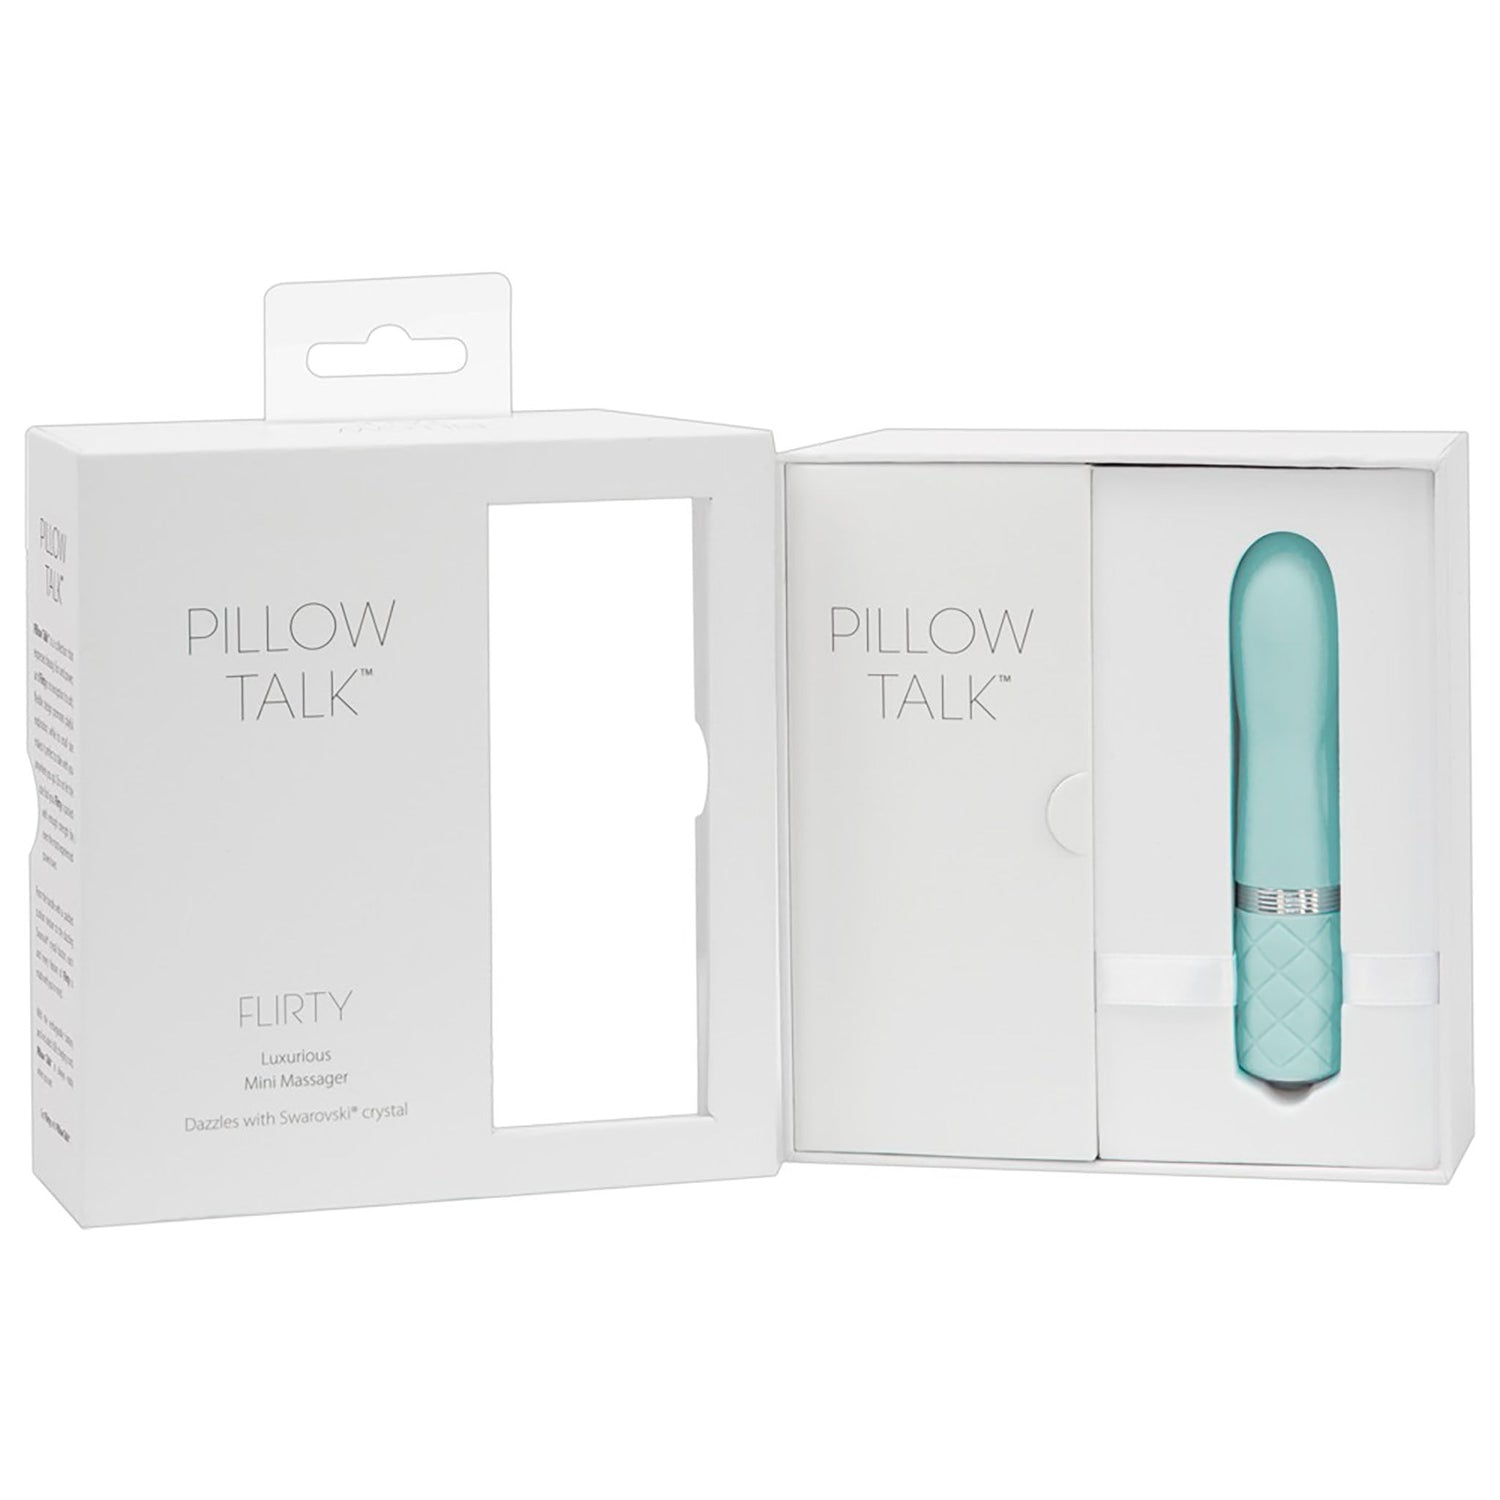 Pillow Talk Flirty Türkis Vibrator Verpackung